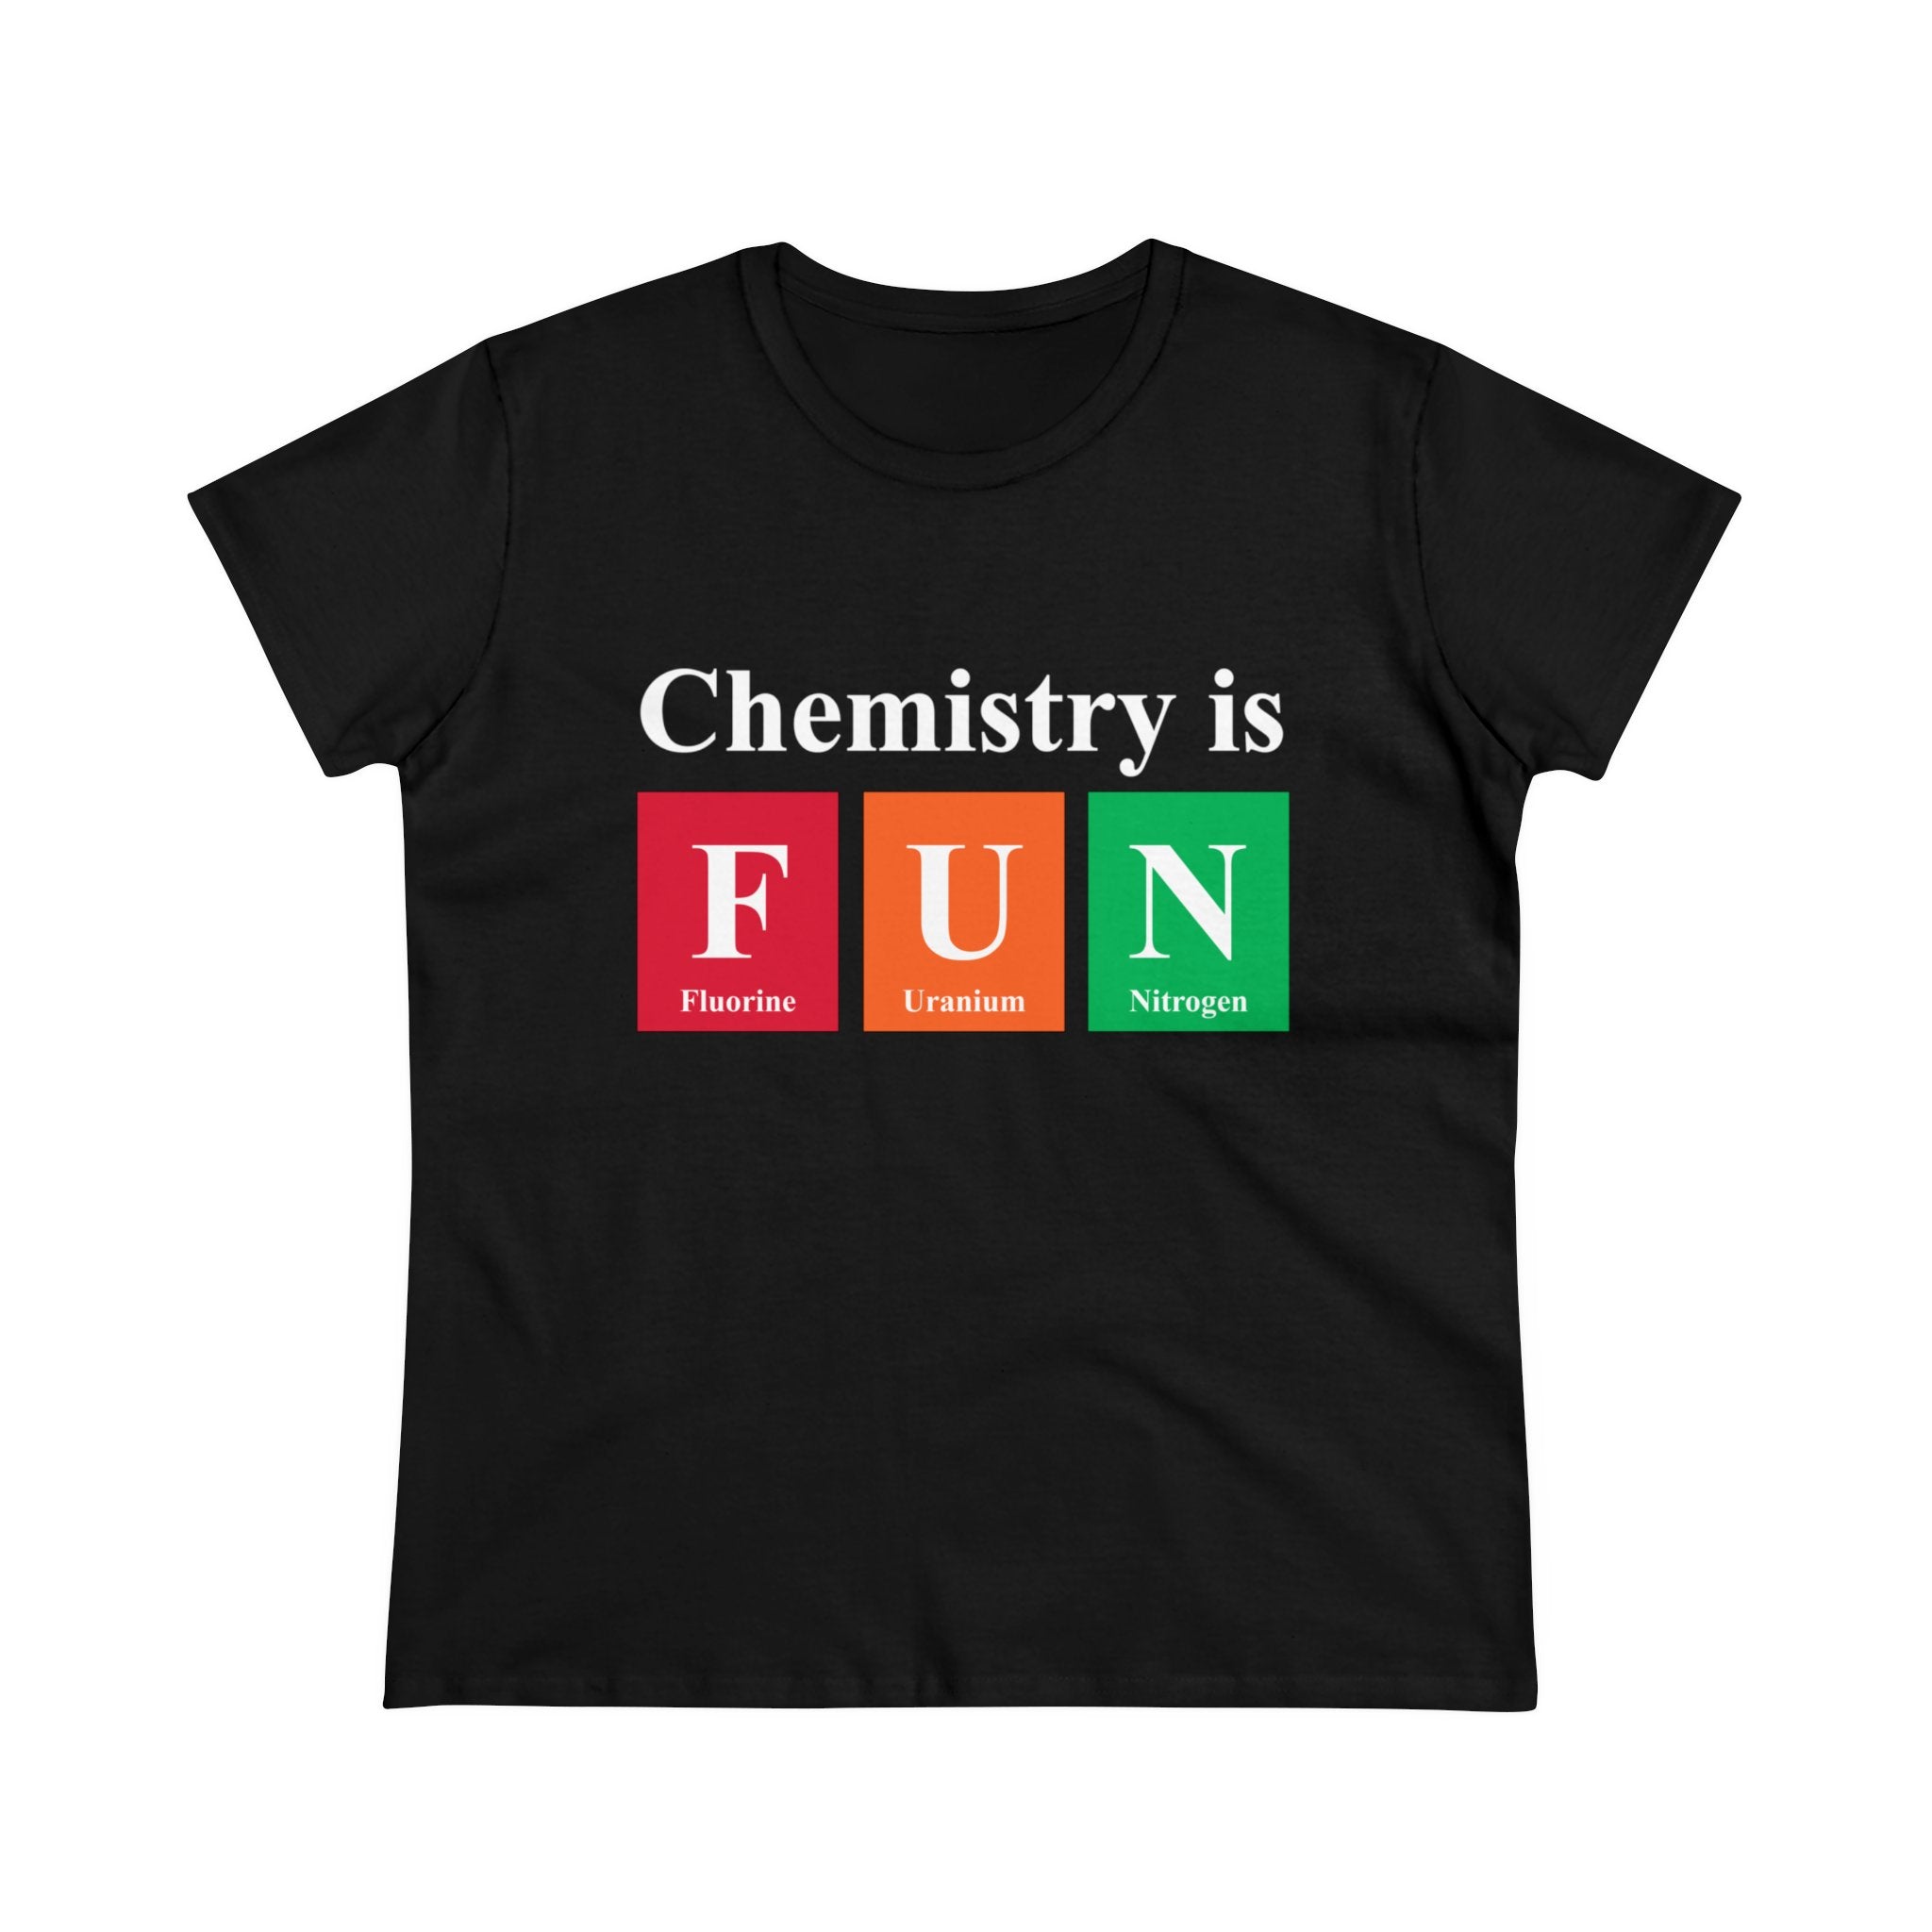 Chemistry is FUN - Women's Tee